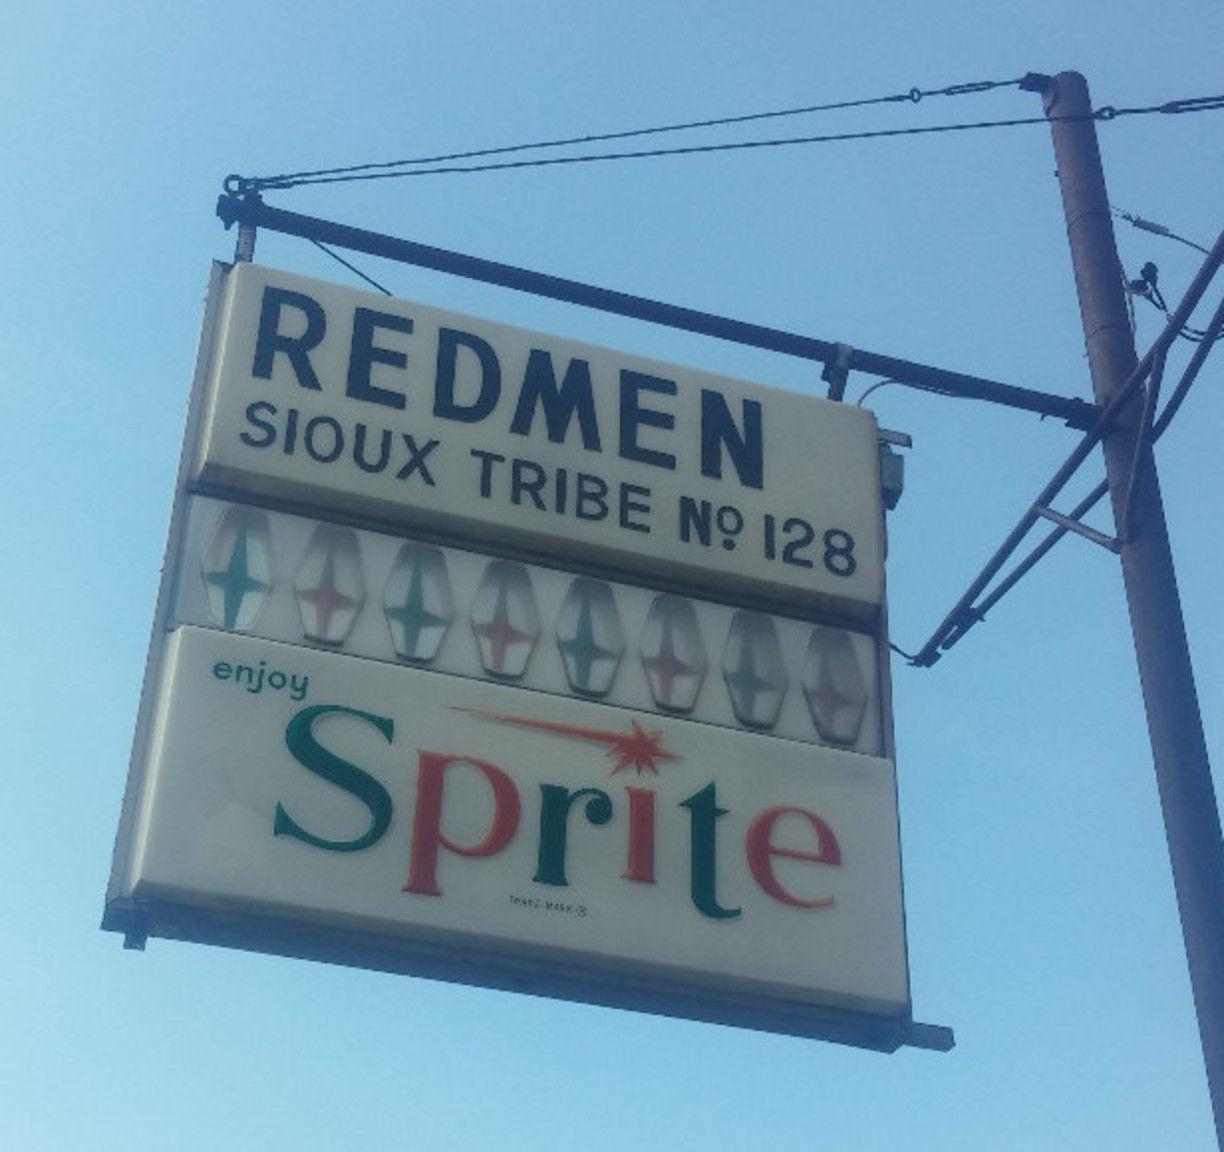 Vintage Sprite Logo - Red Men Lodge, Columbus, Ohio - Check out the vintage Sprite logo...